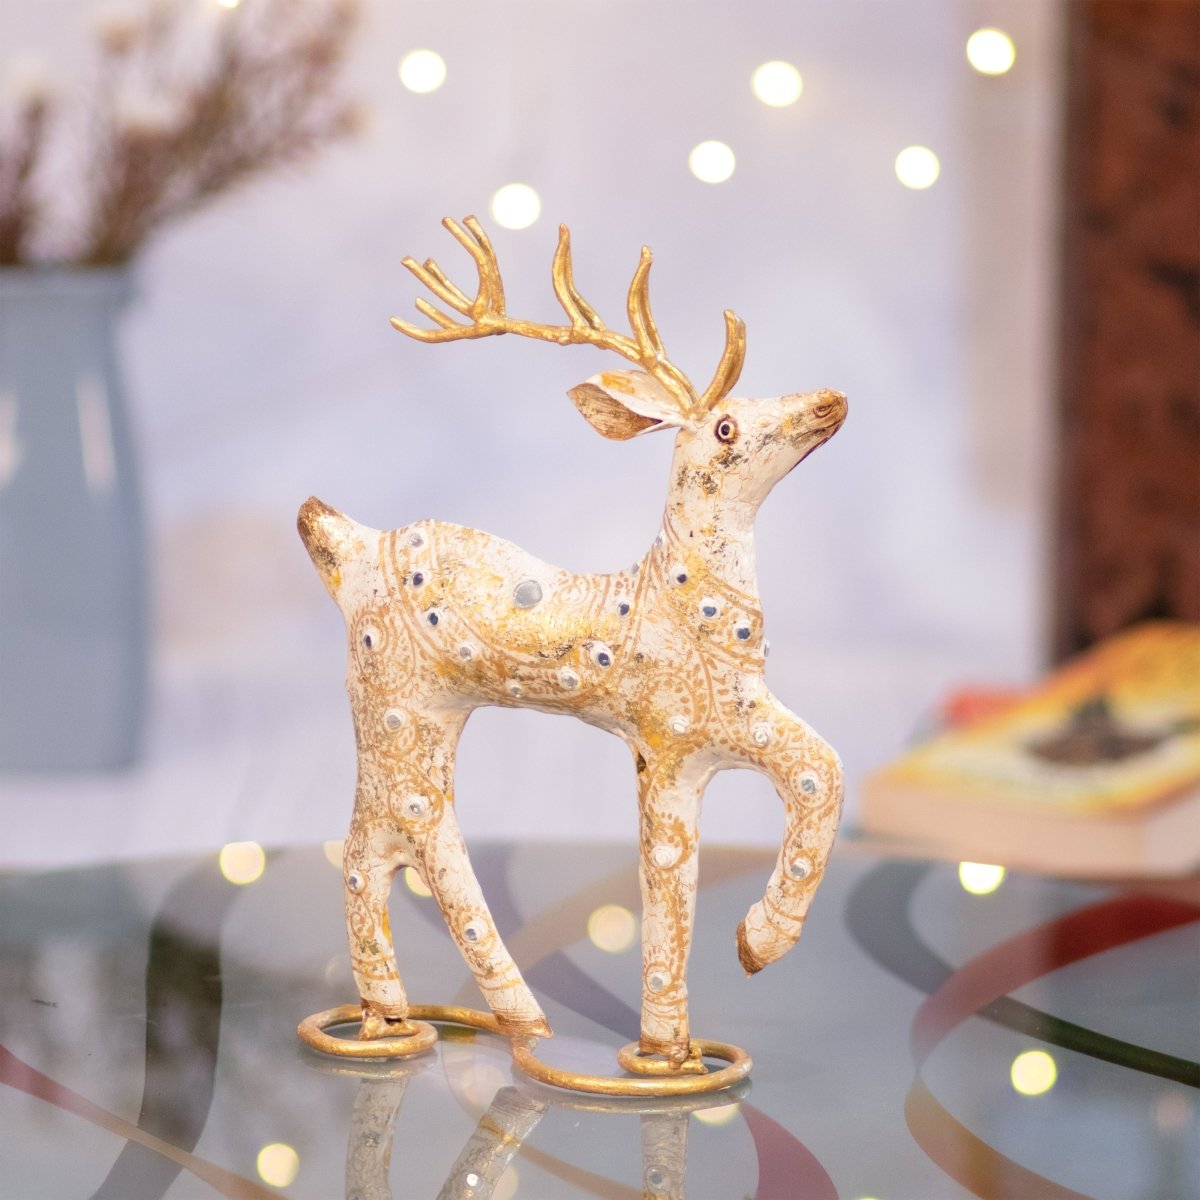 Kezevel Christmas Decoration Reindeer Statue - White and Golden Metal Deer Showpiece for Home Decor, Xmas, Reindeer Figurine